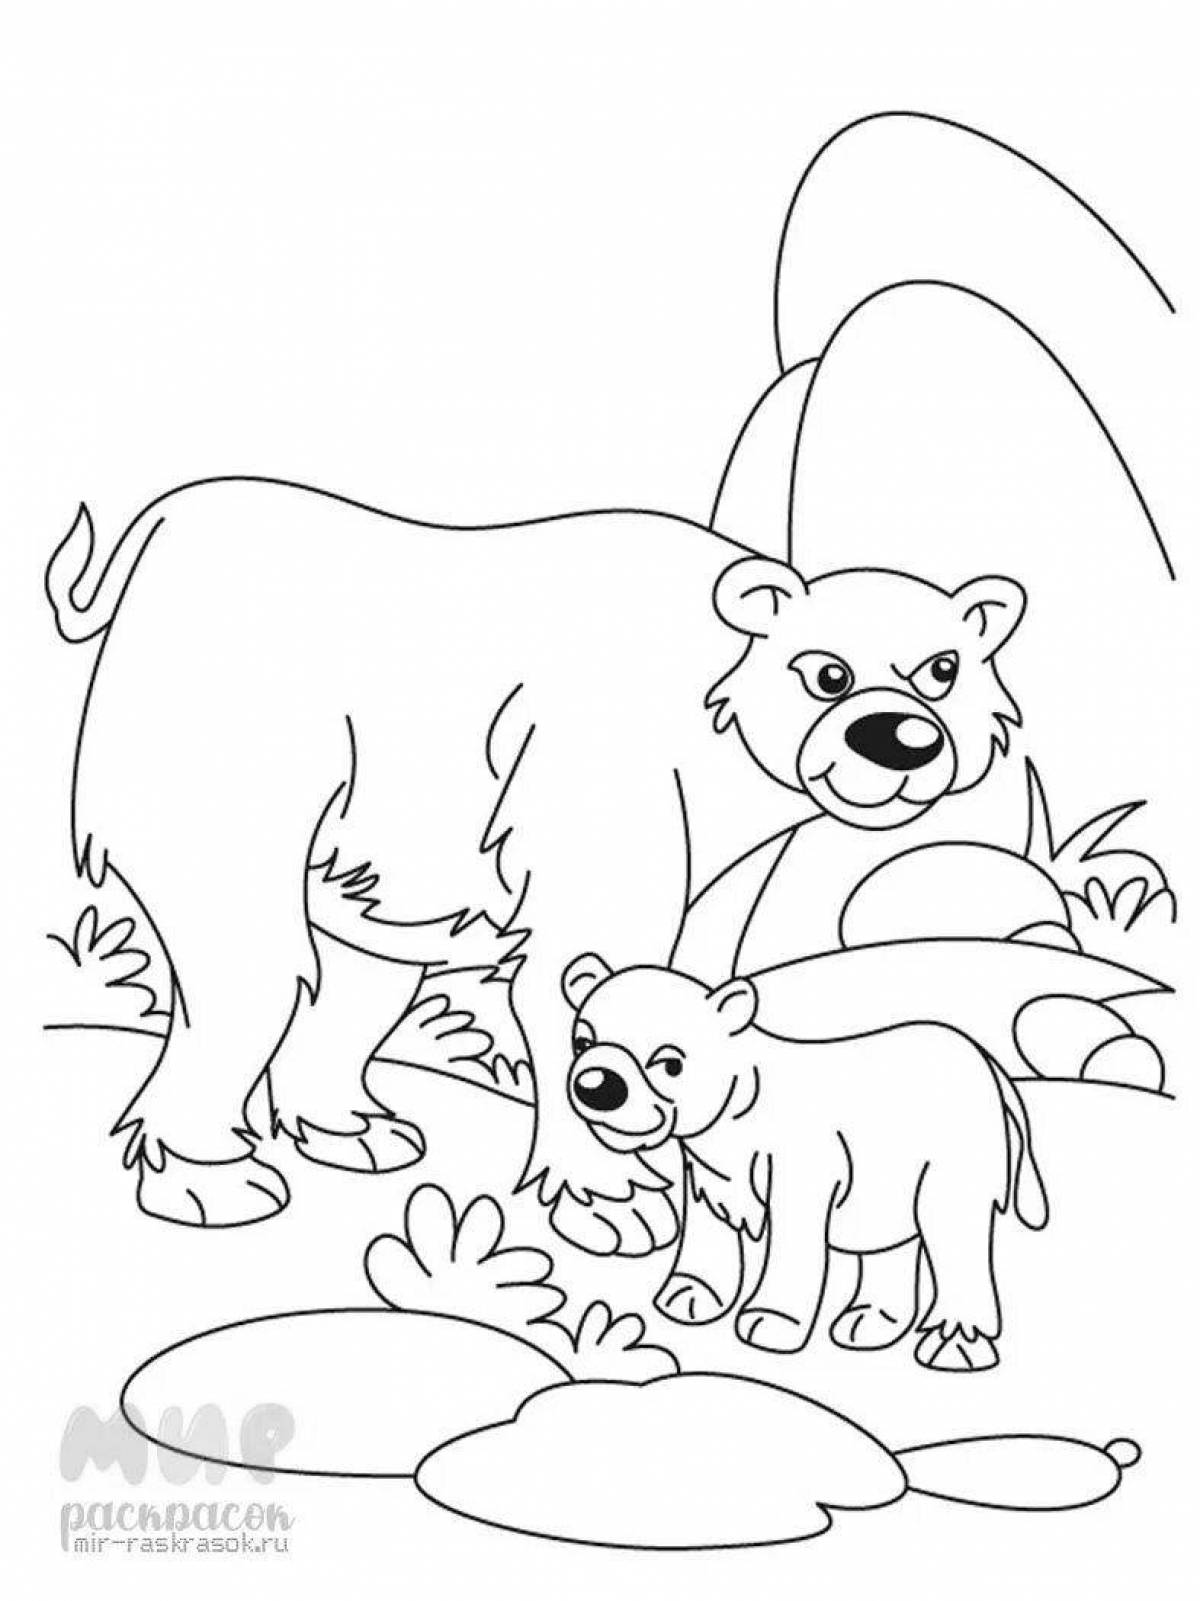 Coloring book brave bear